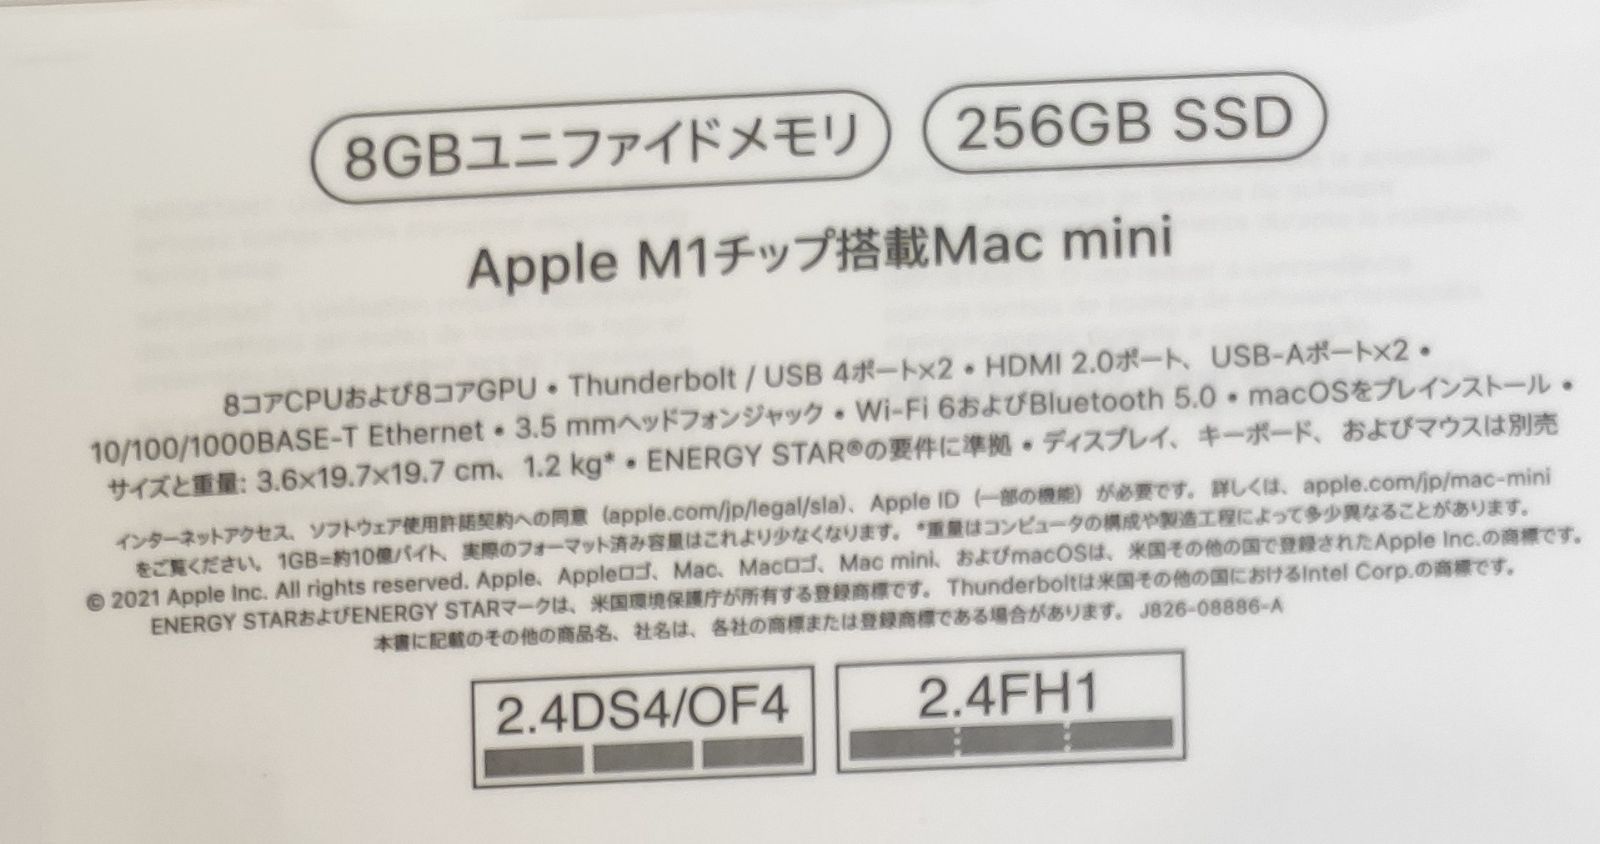 Apple Mac mini m1チップ 8GBメモリ 256GB SSD - デスクトップ型PC